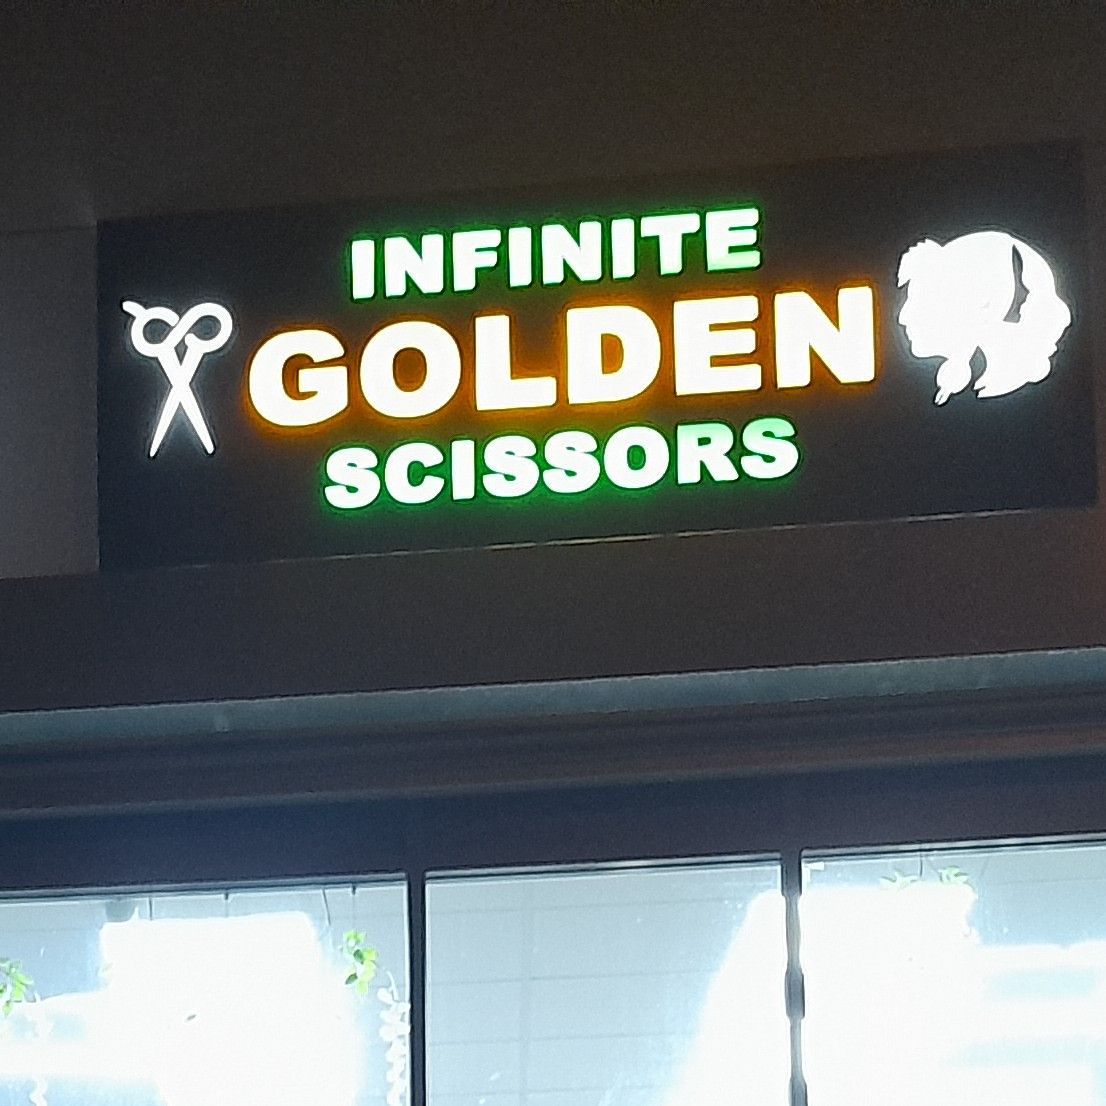 Infinite Golden Scissors, 47-49 Spring Hill, B18 7BH, Birmingham